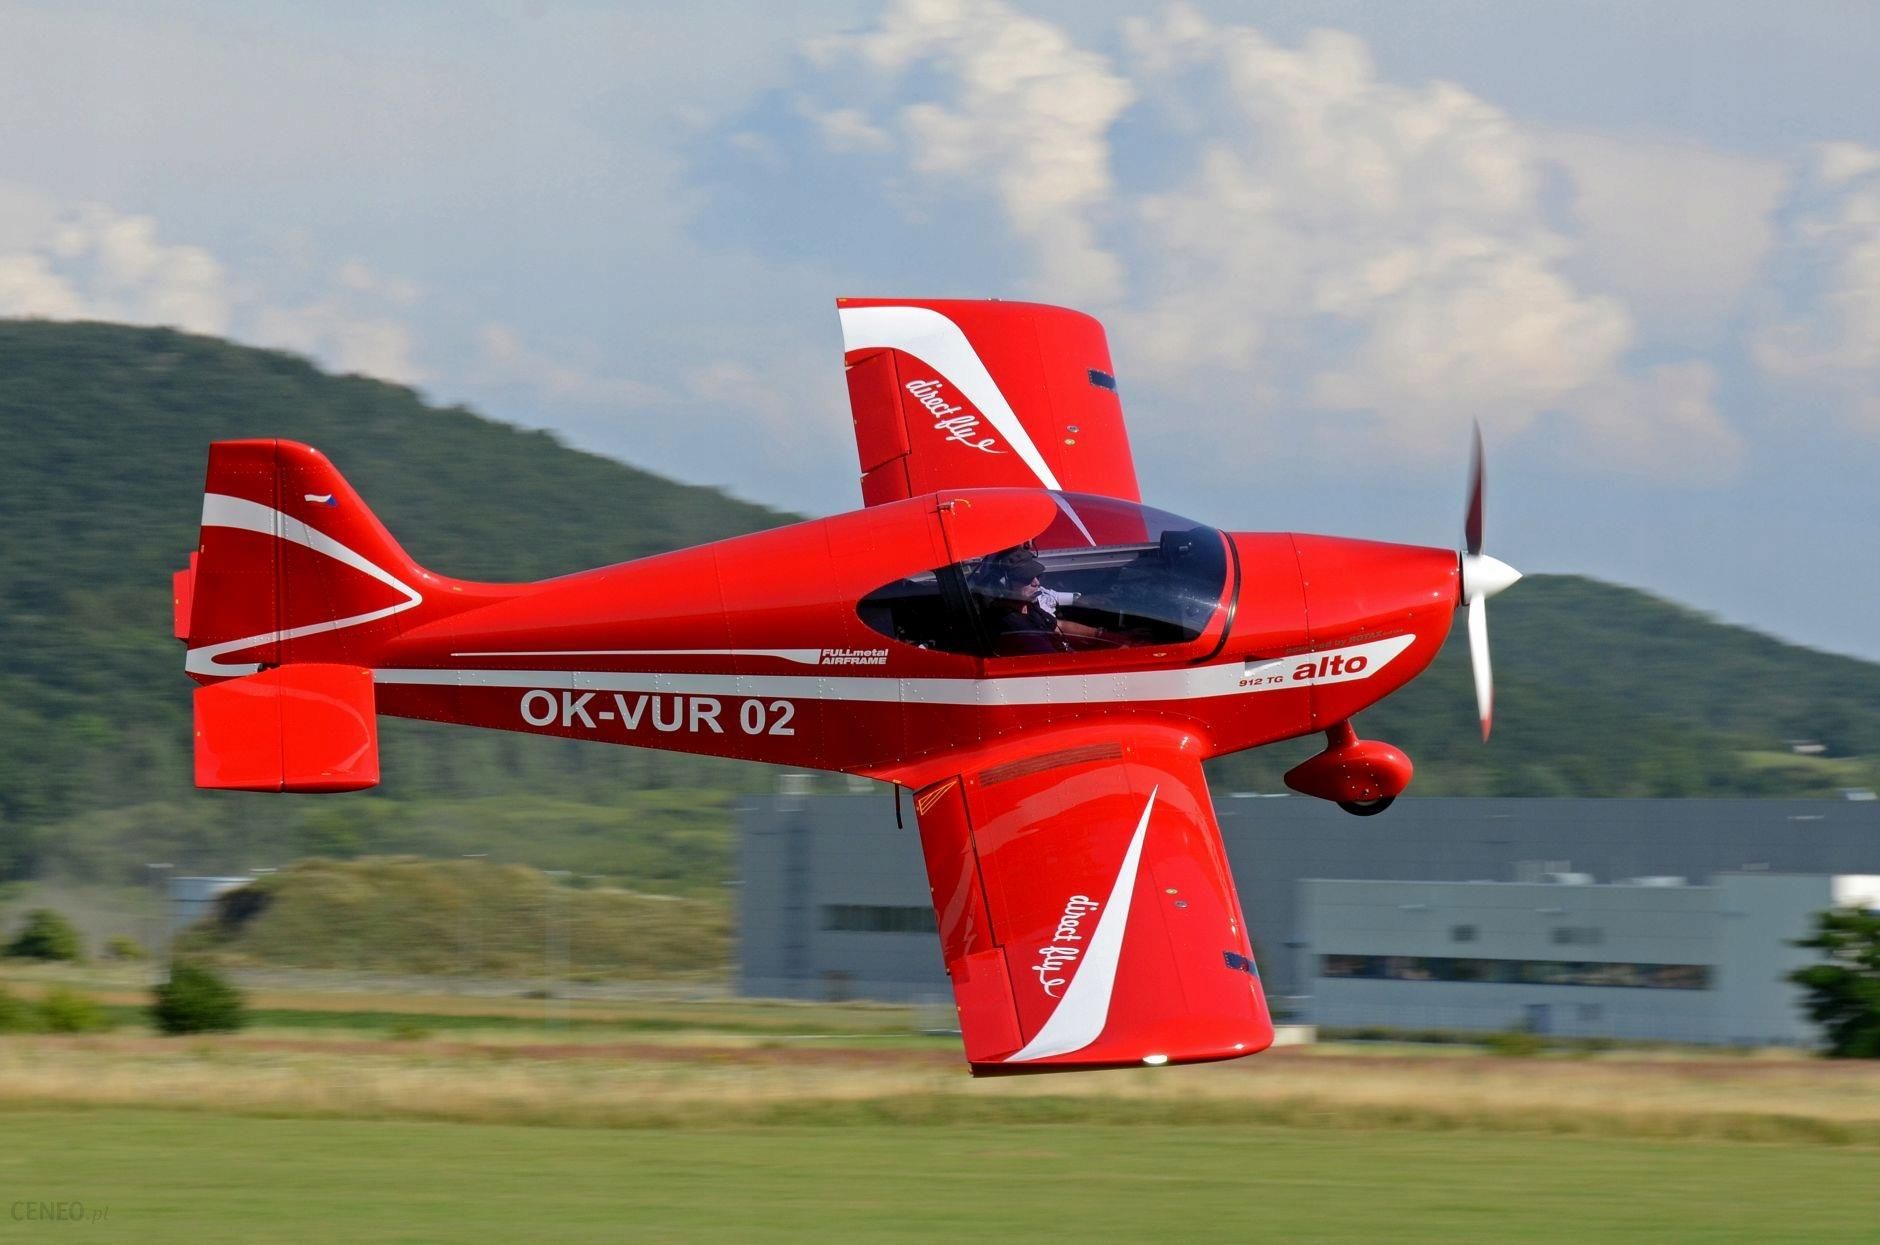 samolot ultralekki ALTO 912 Rotax 100 HP - NOWY